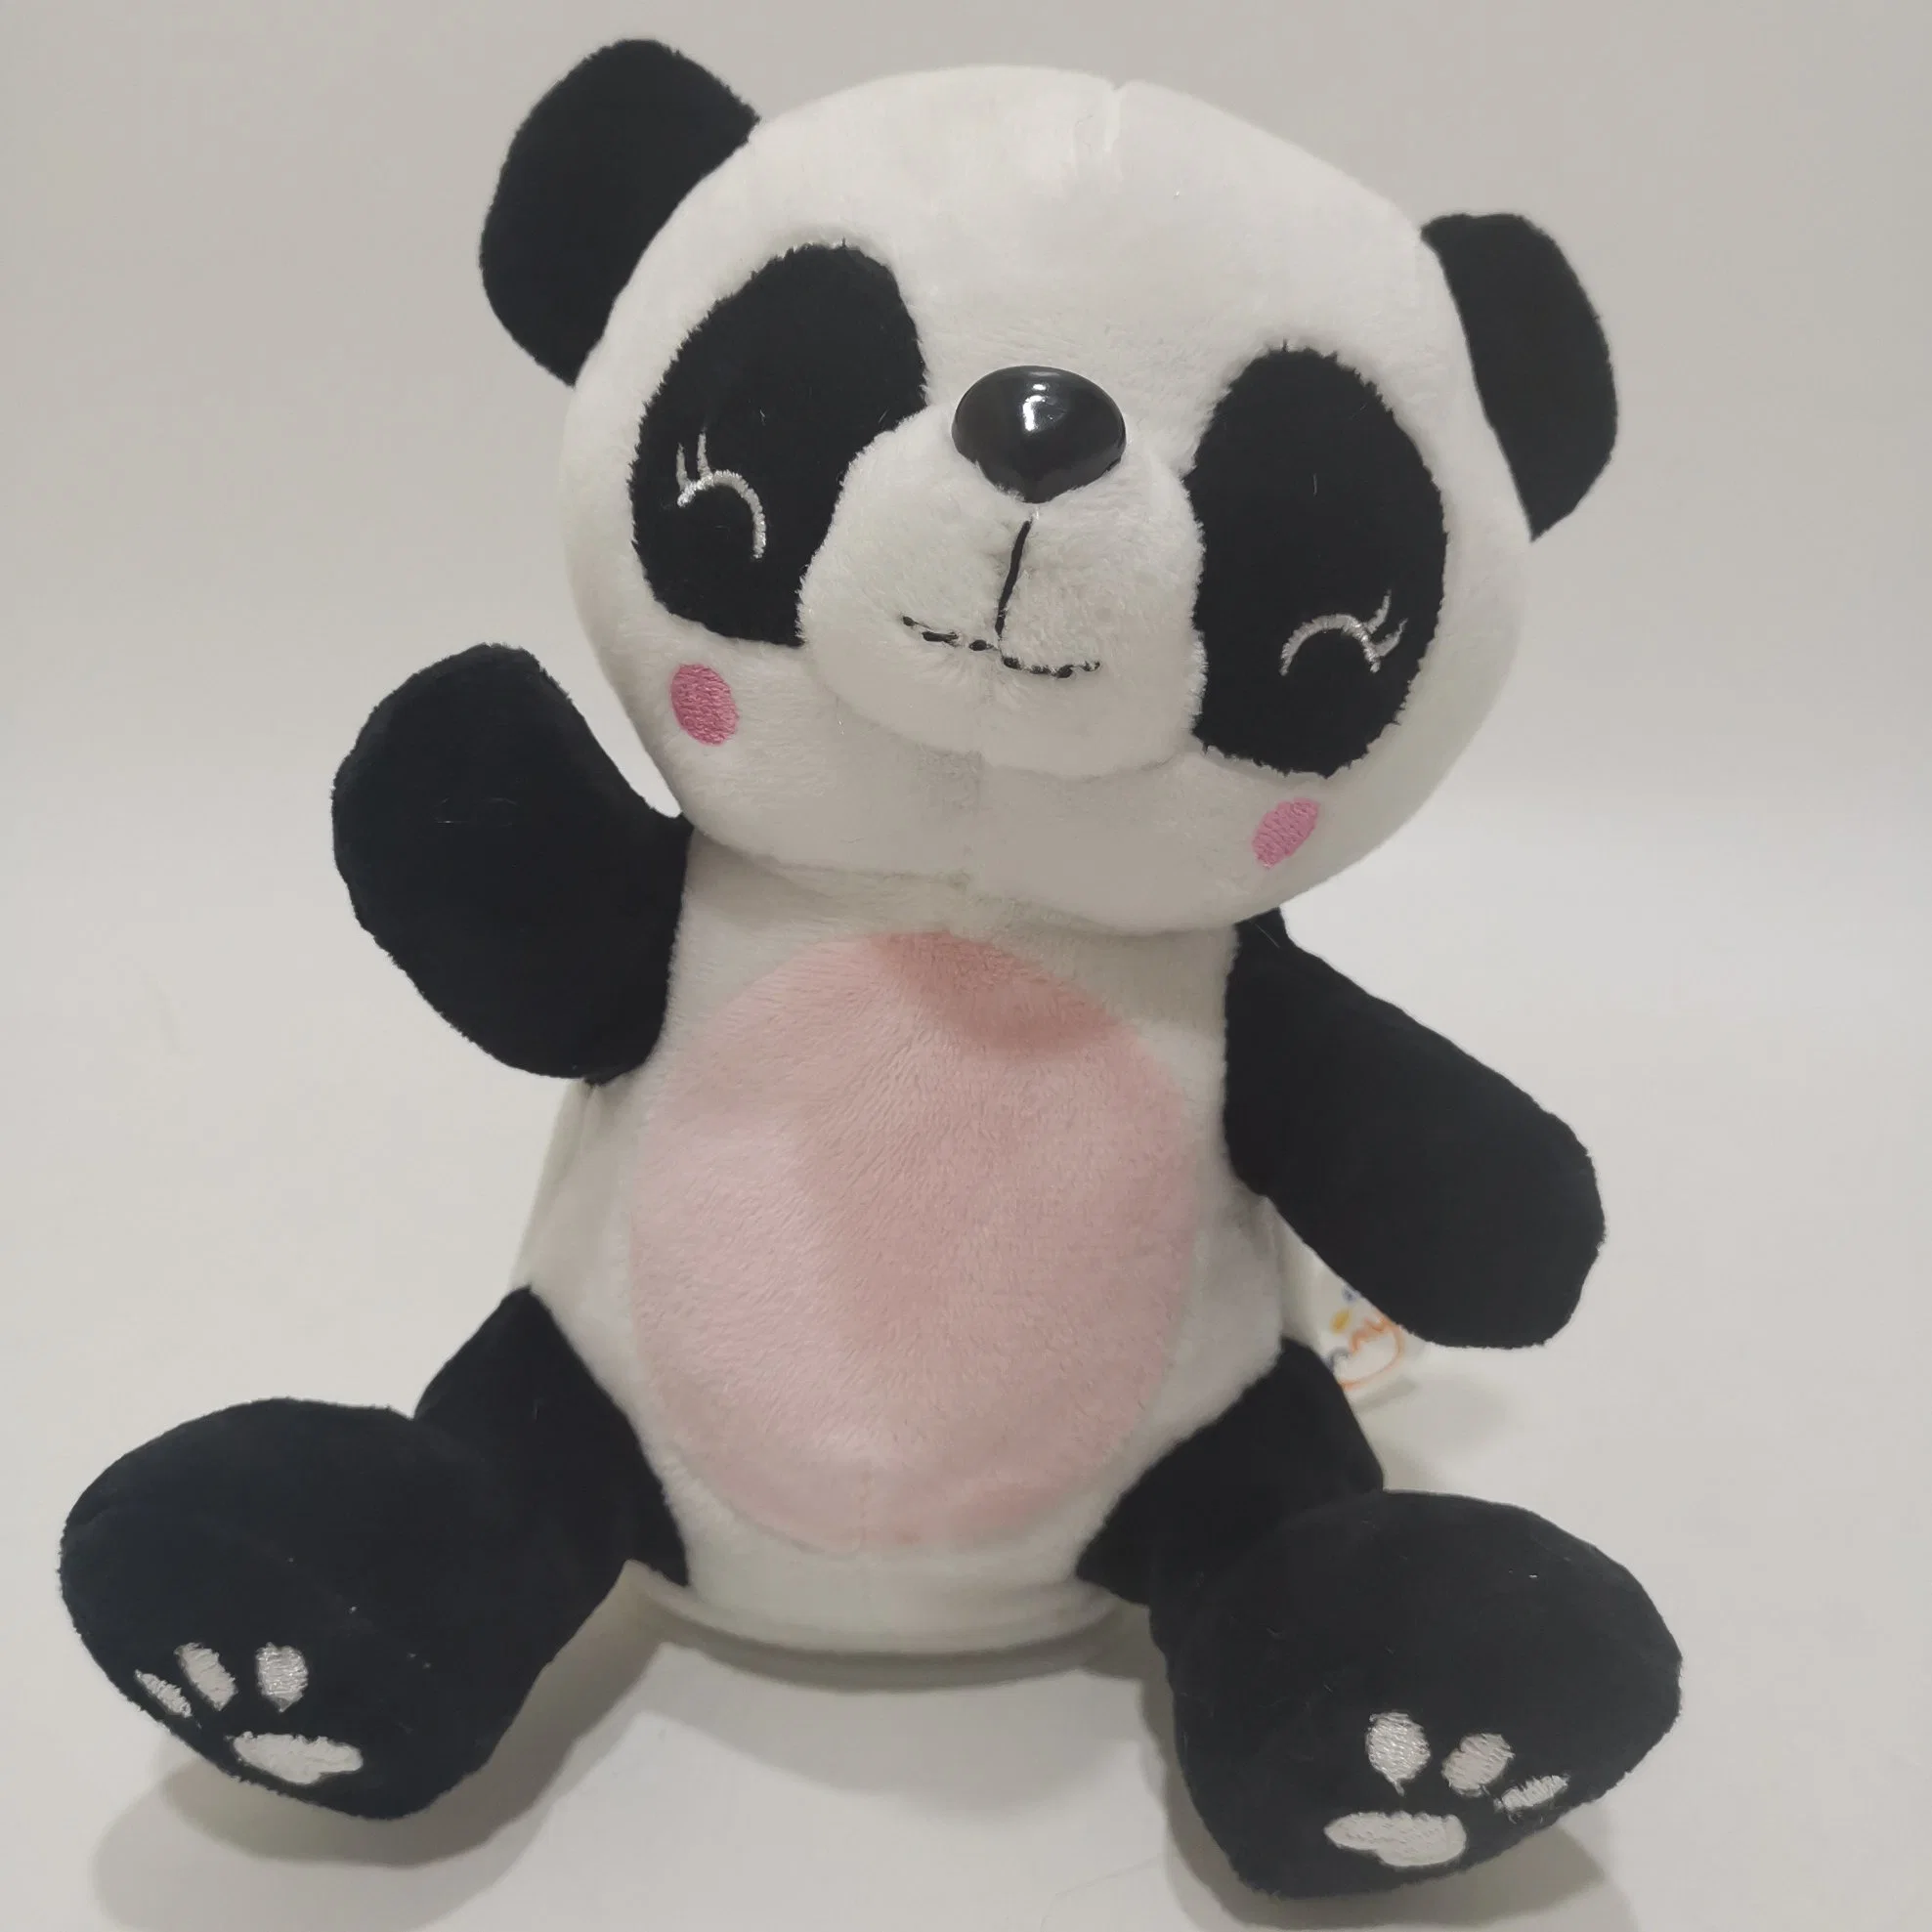 Cute Panda Plush Animals Talking Back Electrical Toys for Kids